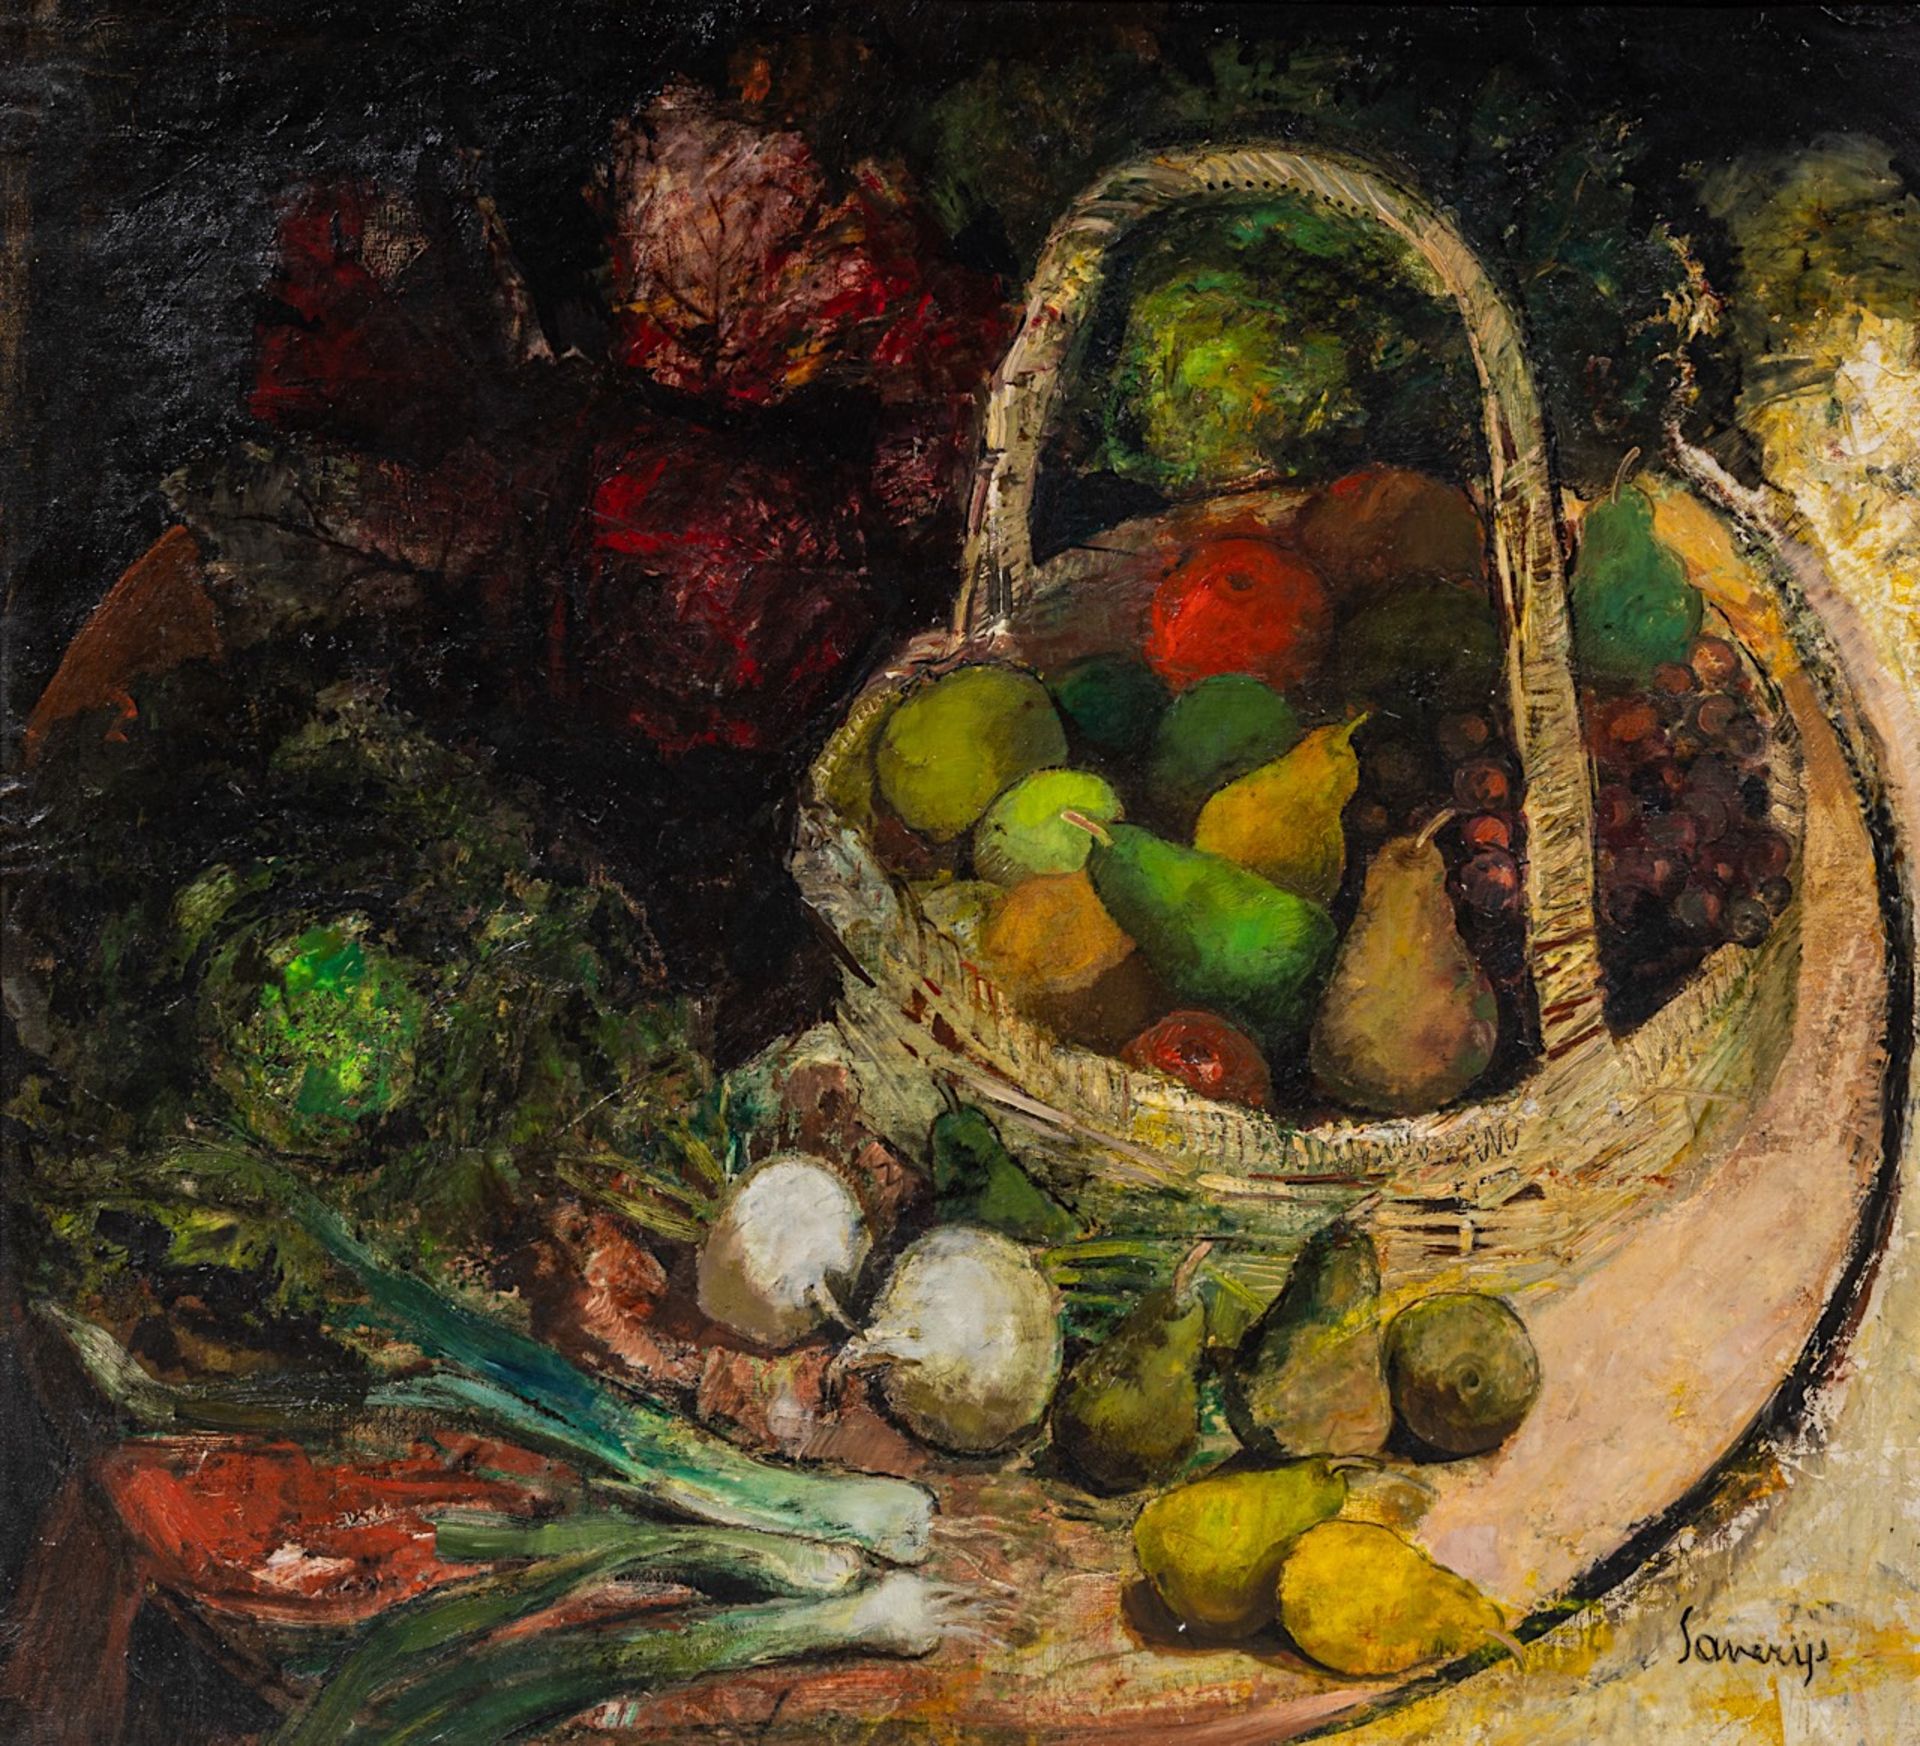 Albert Saverys (1886-1964), still life with a fruit basket, oil on canvas 100 x 110 cm. (39.3 x 43.3